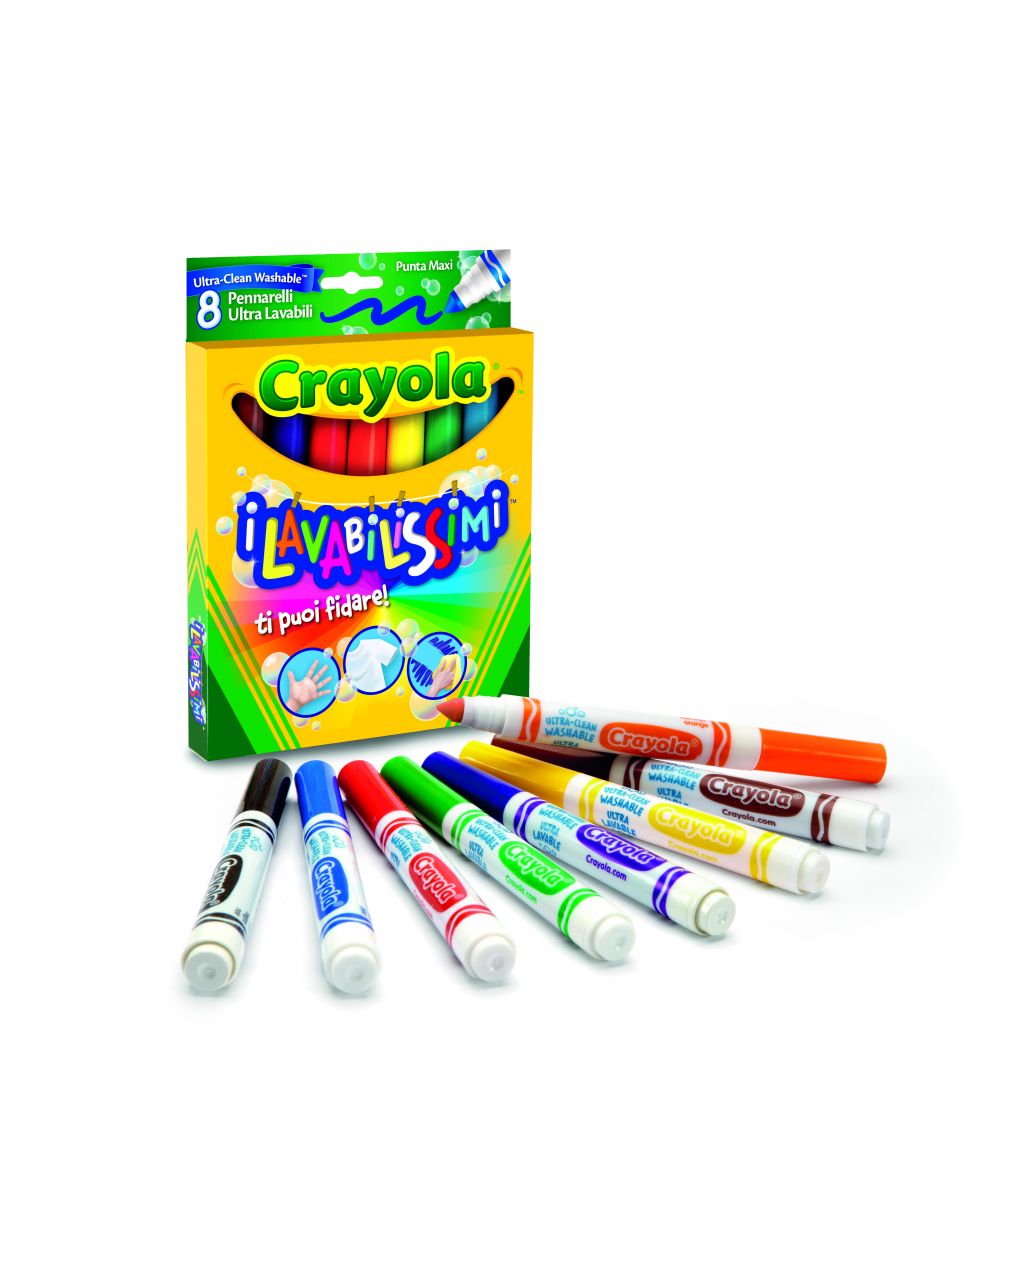 Crayola - 8 pennarelli p.maxi ultra lavabili - Crayola